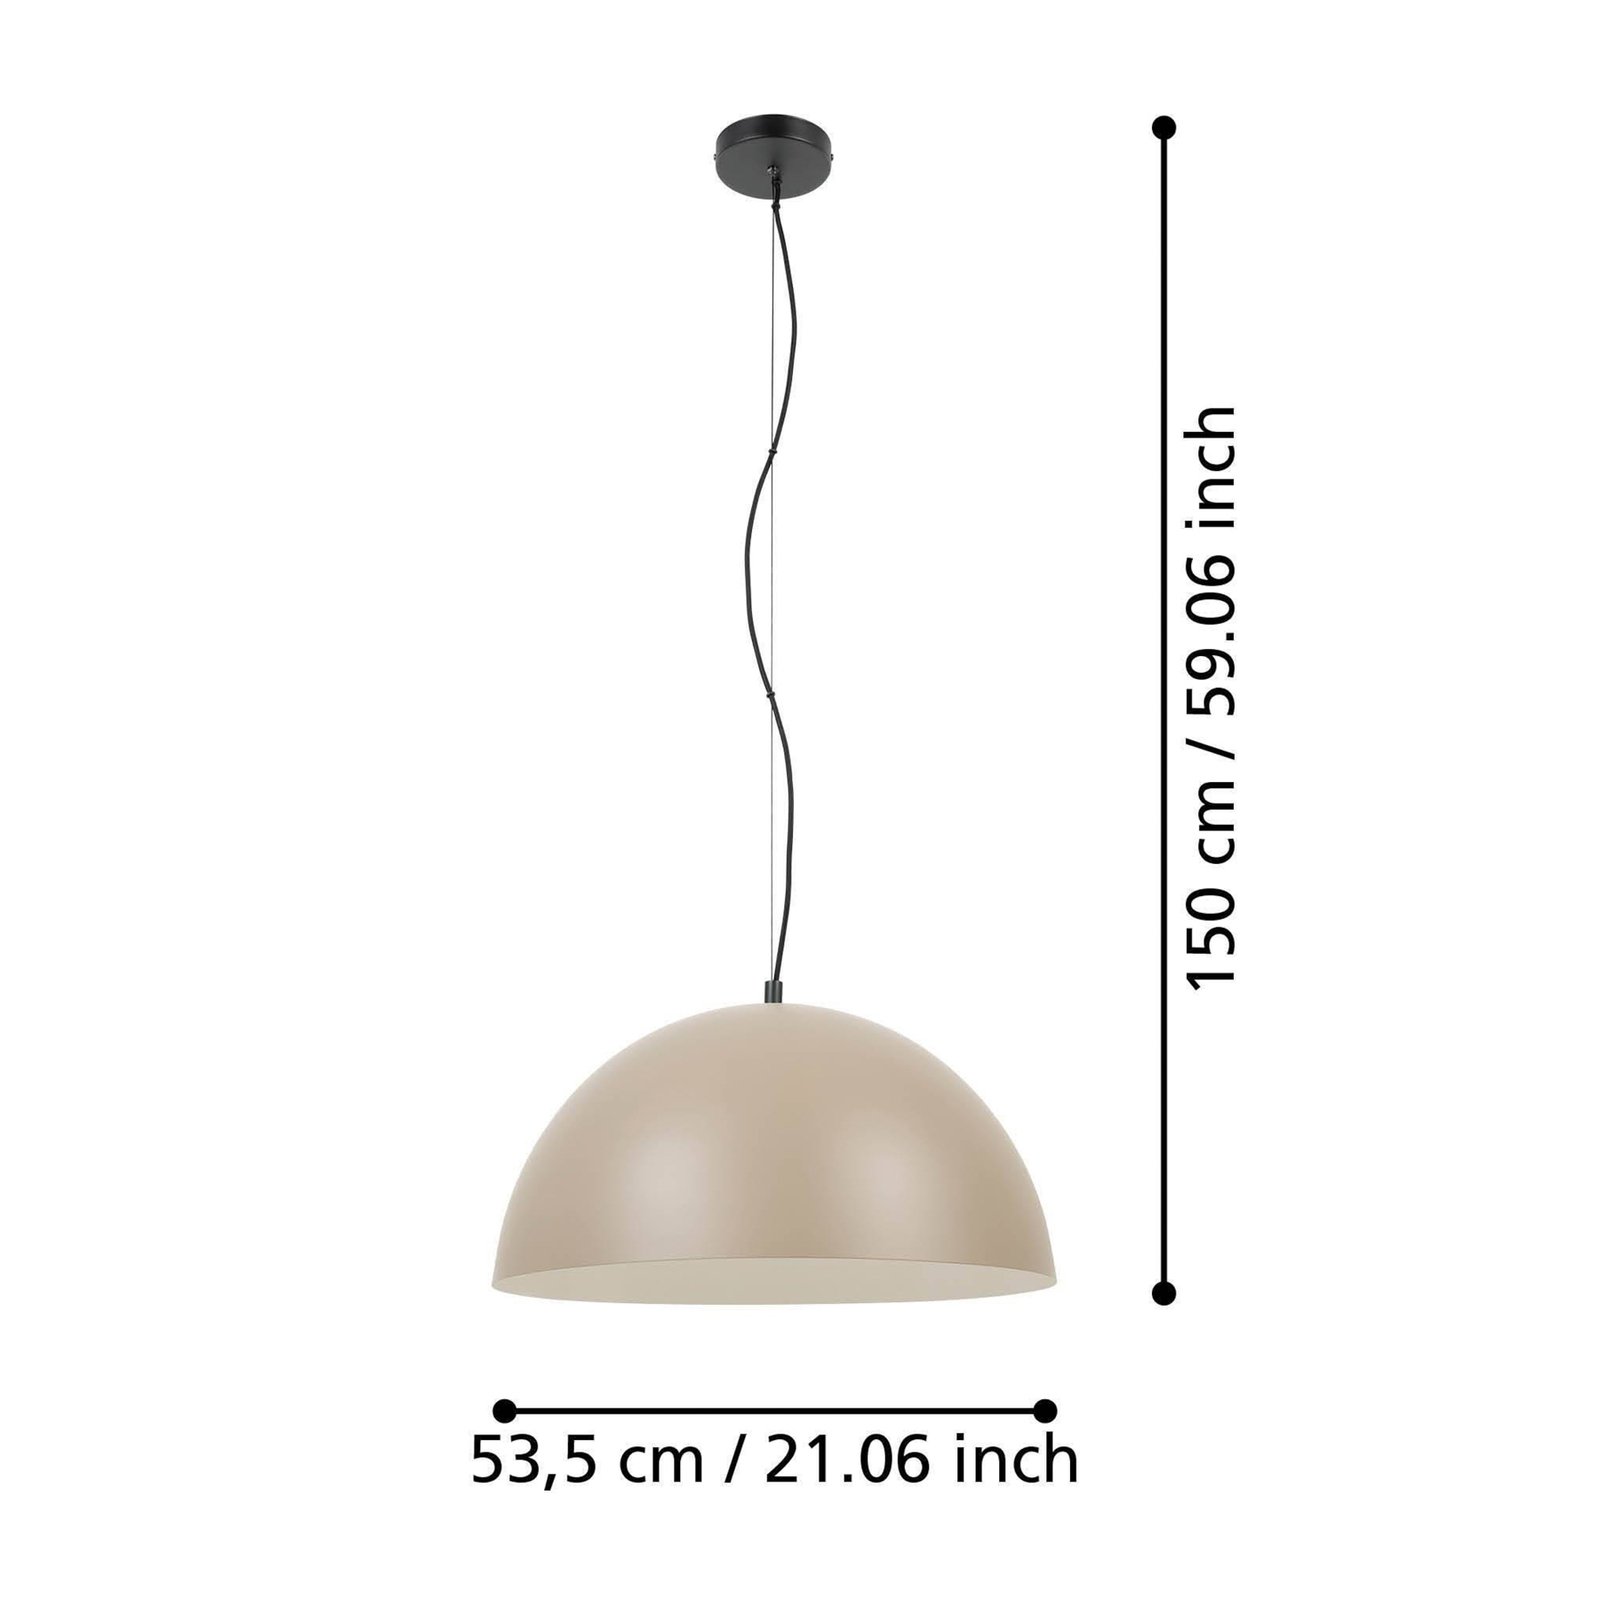 Gaetano 1 pendant light, Ø 53 cm, sand/cream, steel